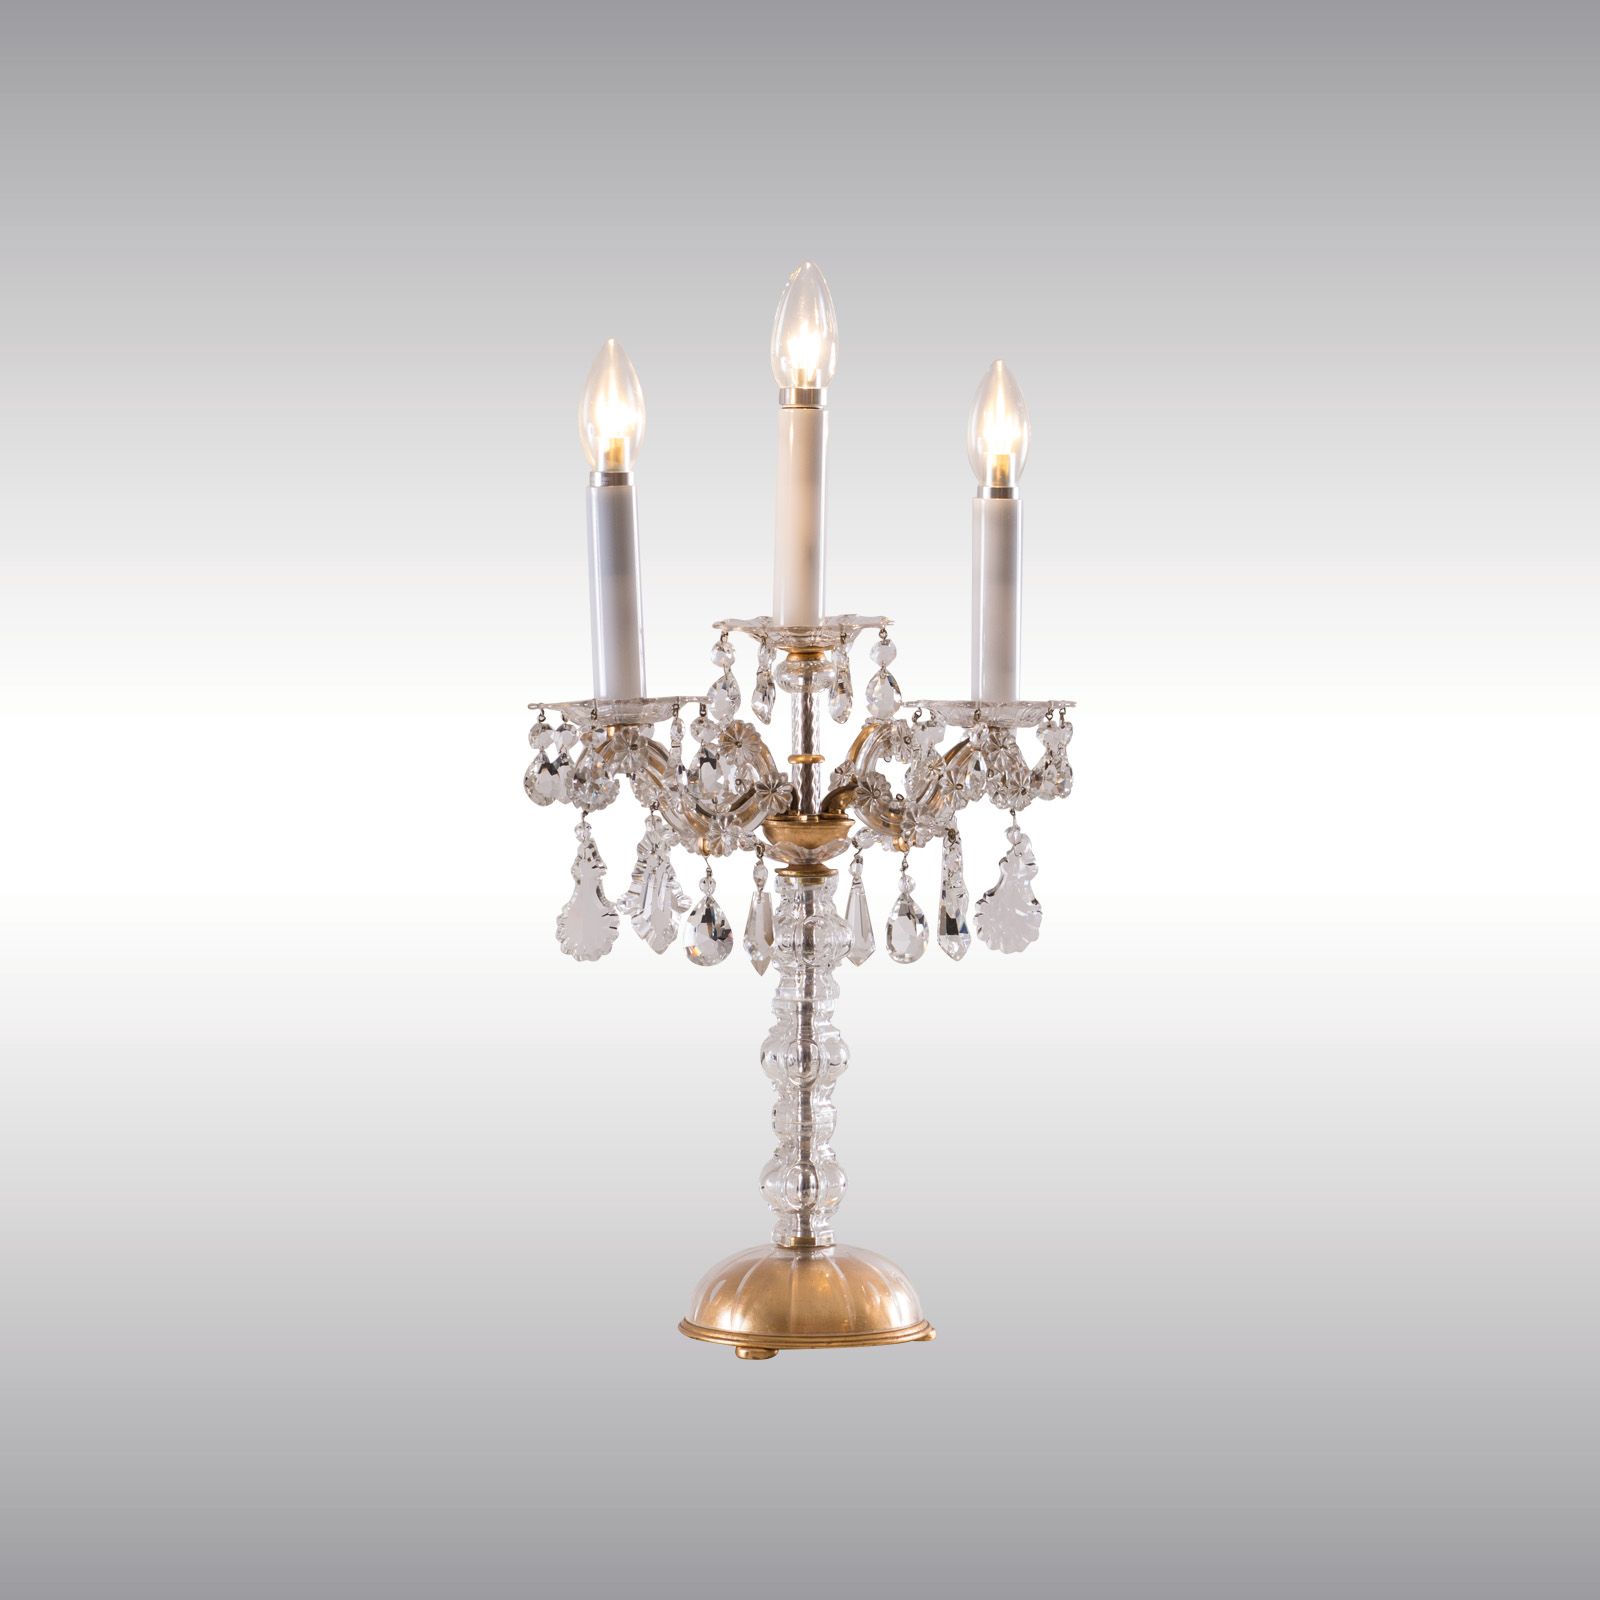 WOKA LAMPS VIENNA - OrderNr.: 4052|Crystal-Table-Lamp - Design: WOKA